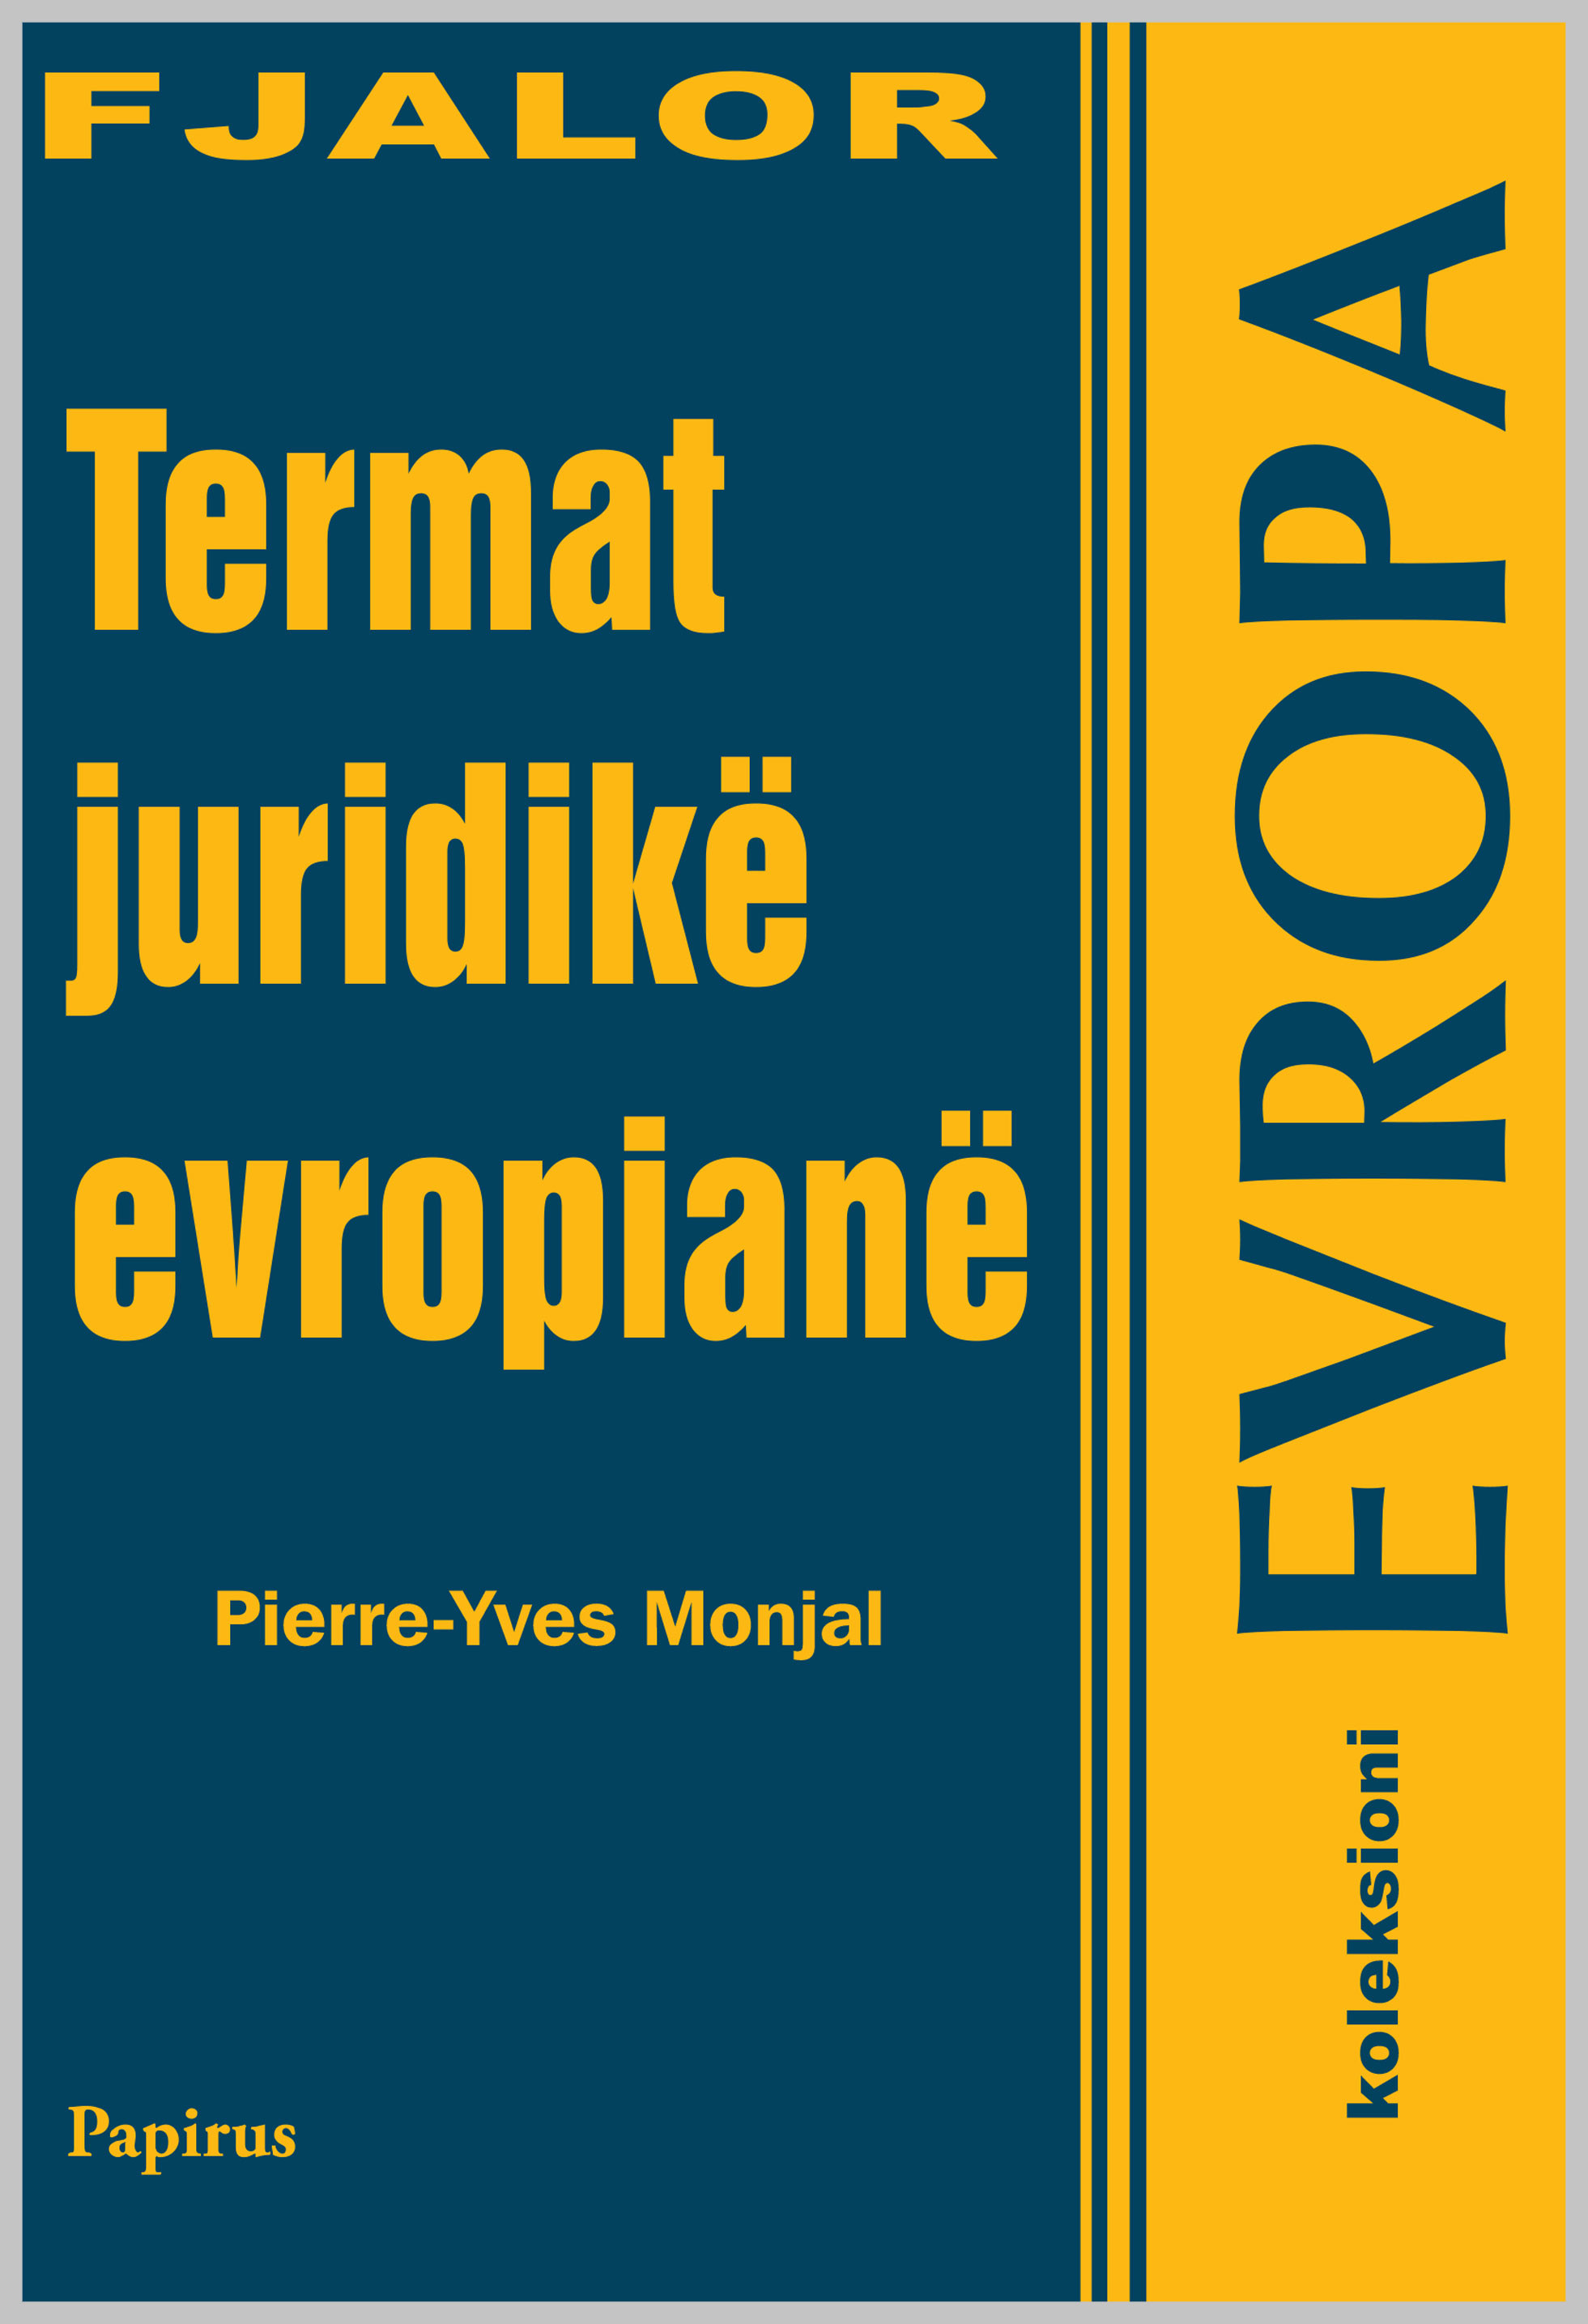 Fjalor Termat juridik europiane